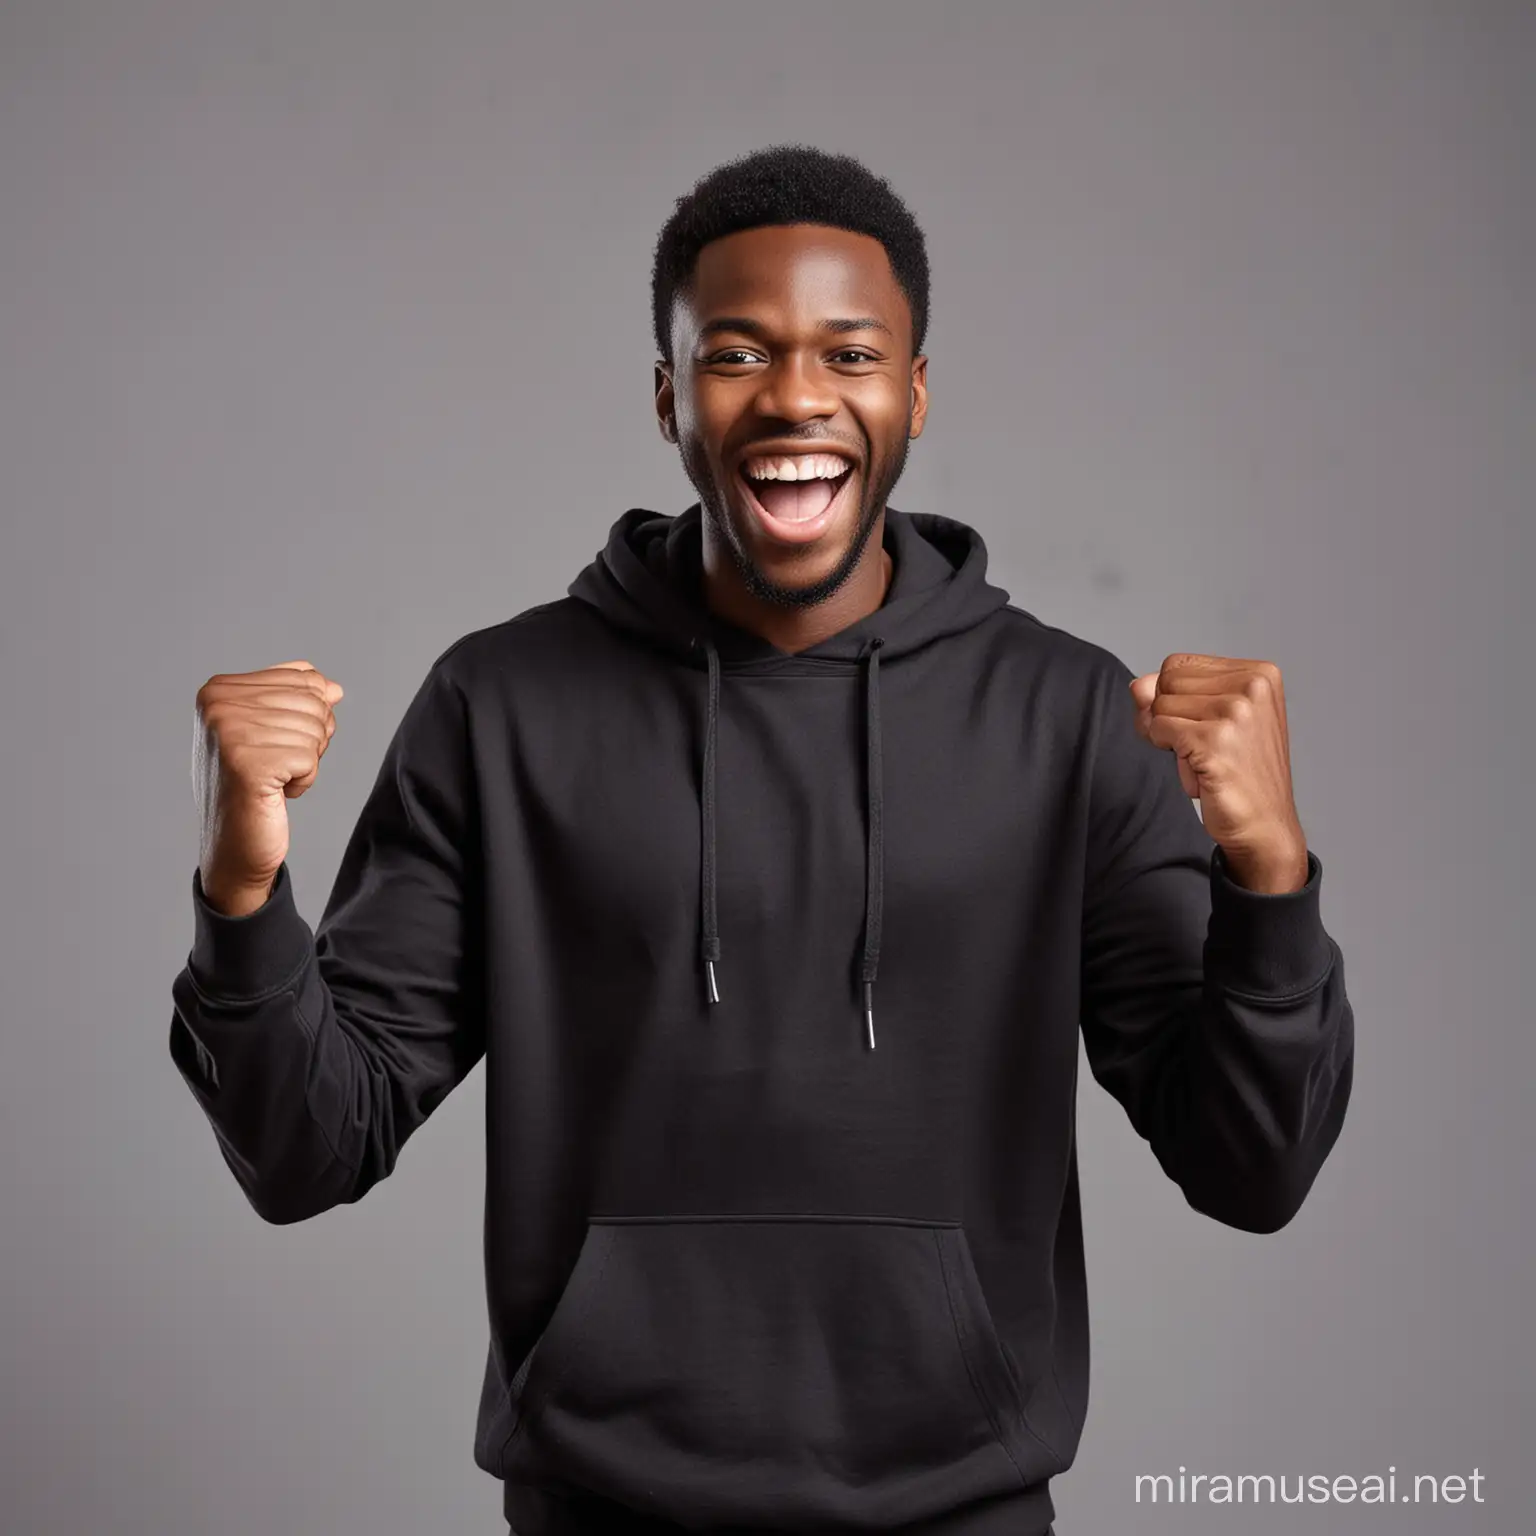 Energetic African American Sports Fan Celebrates with Joyful Energy